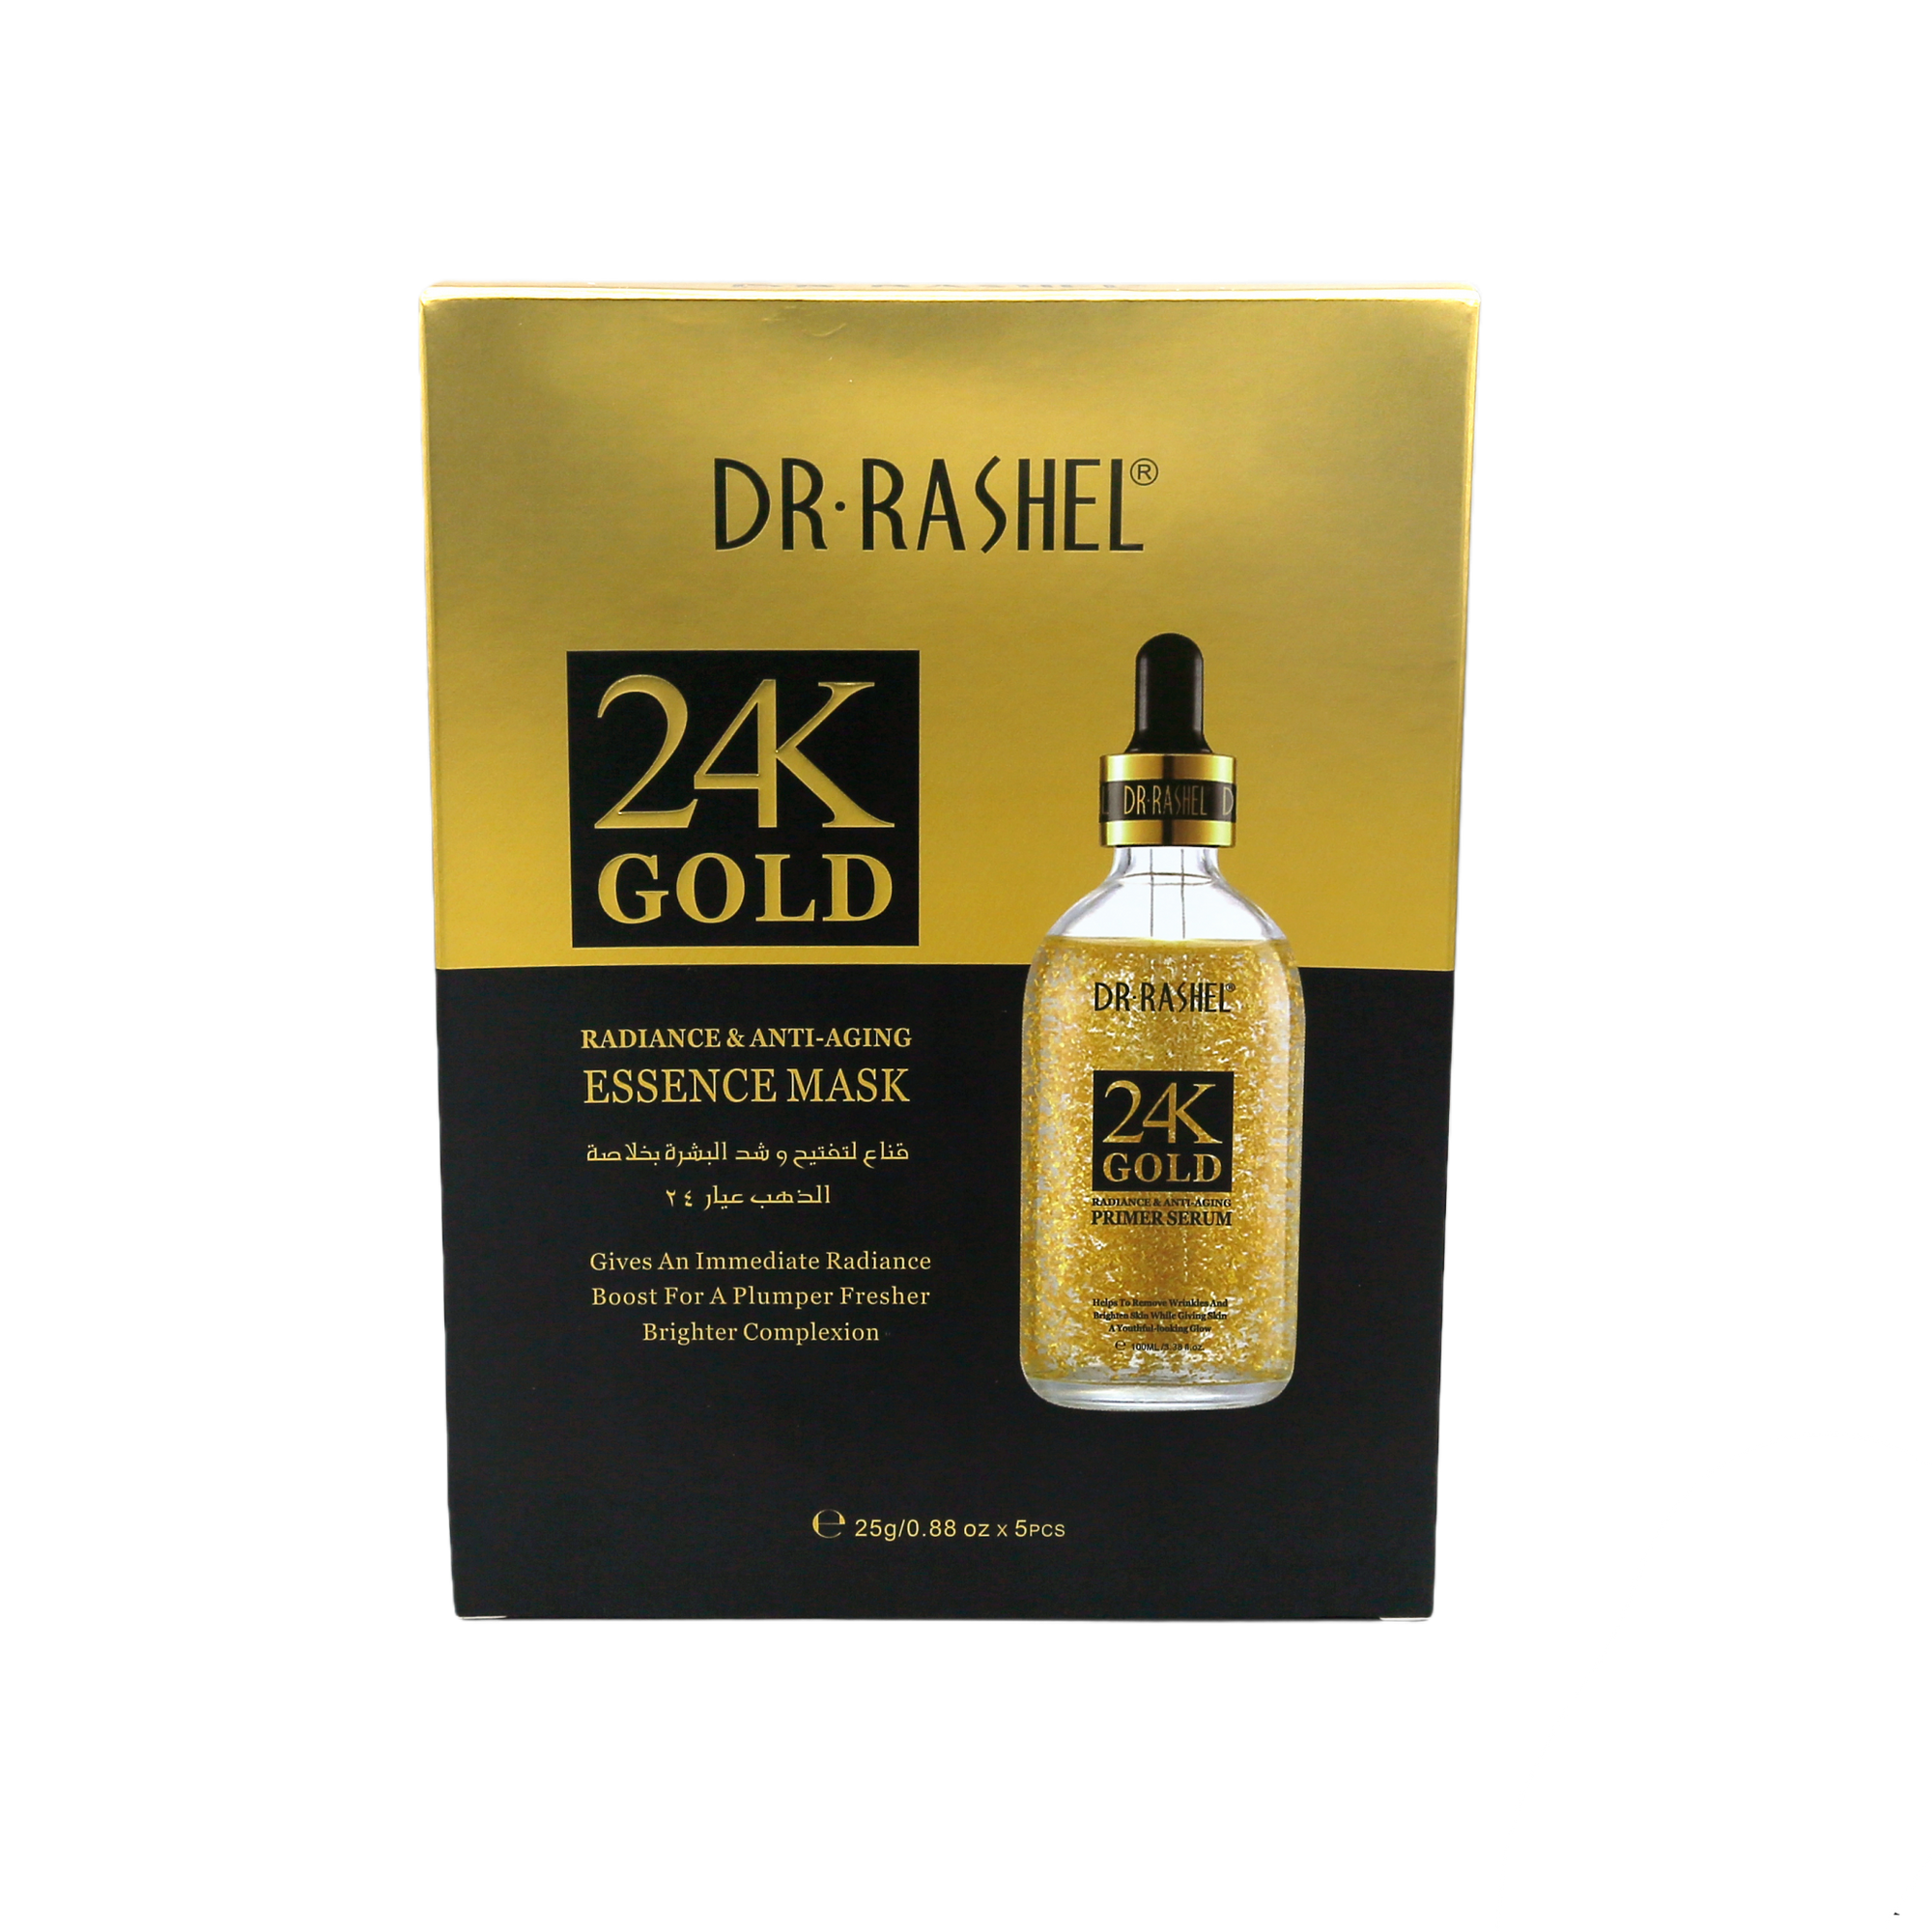 Dr Rashel 24K Gold Essence Mask Radiance & Anti Aging freeshipping - lasertag.pk